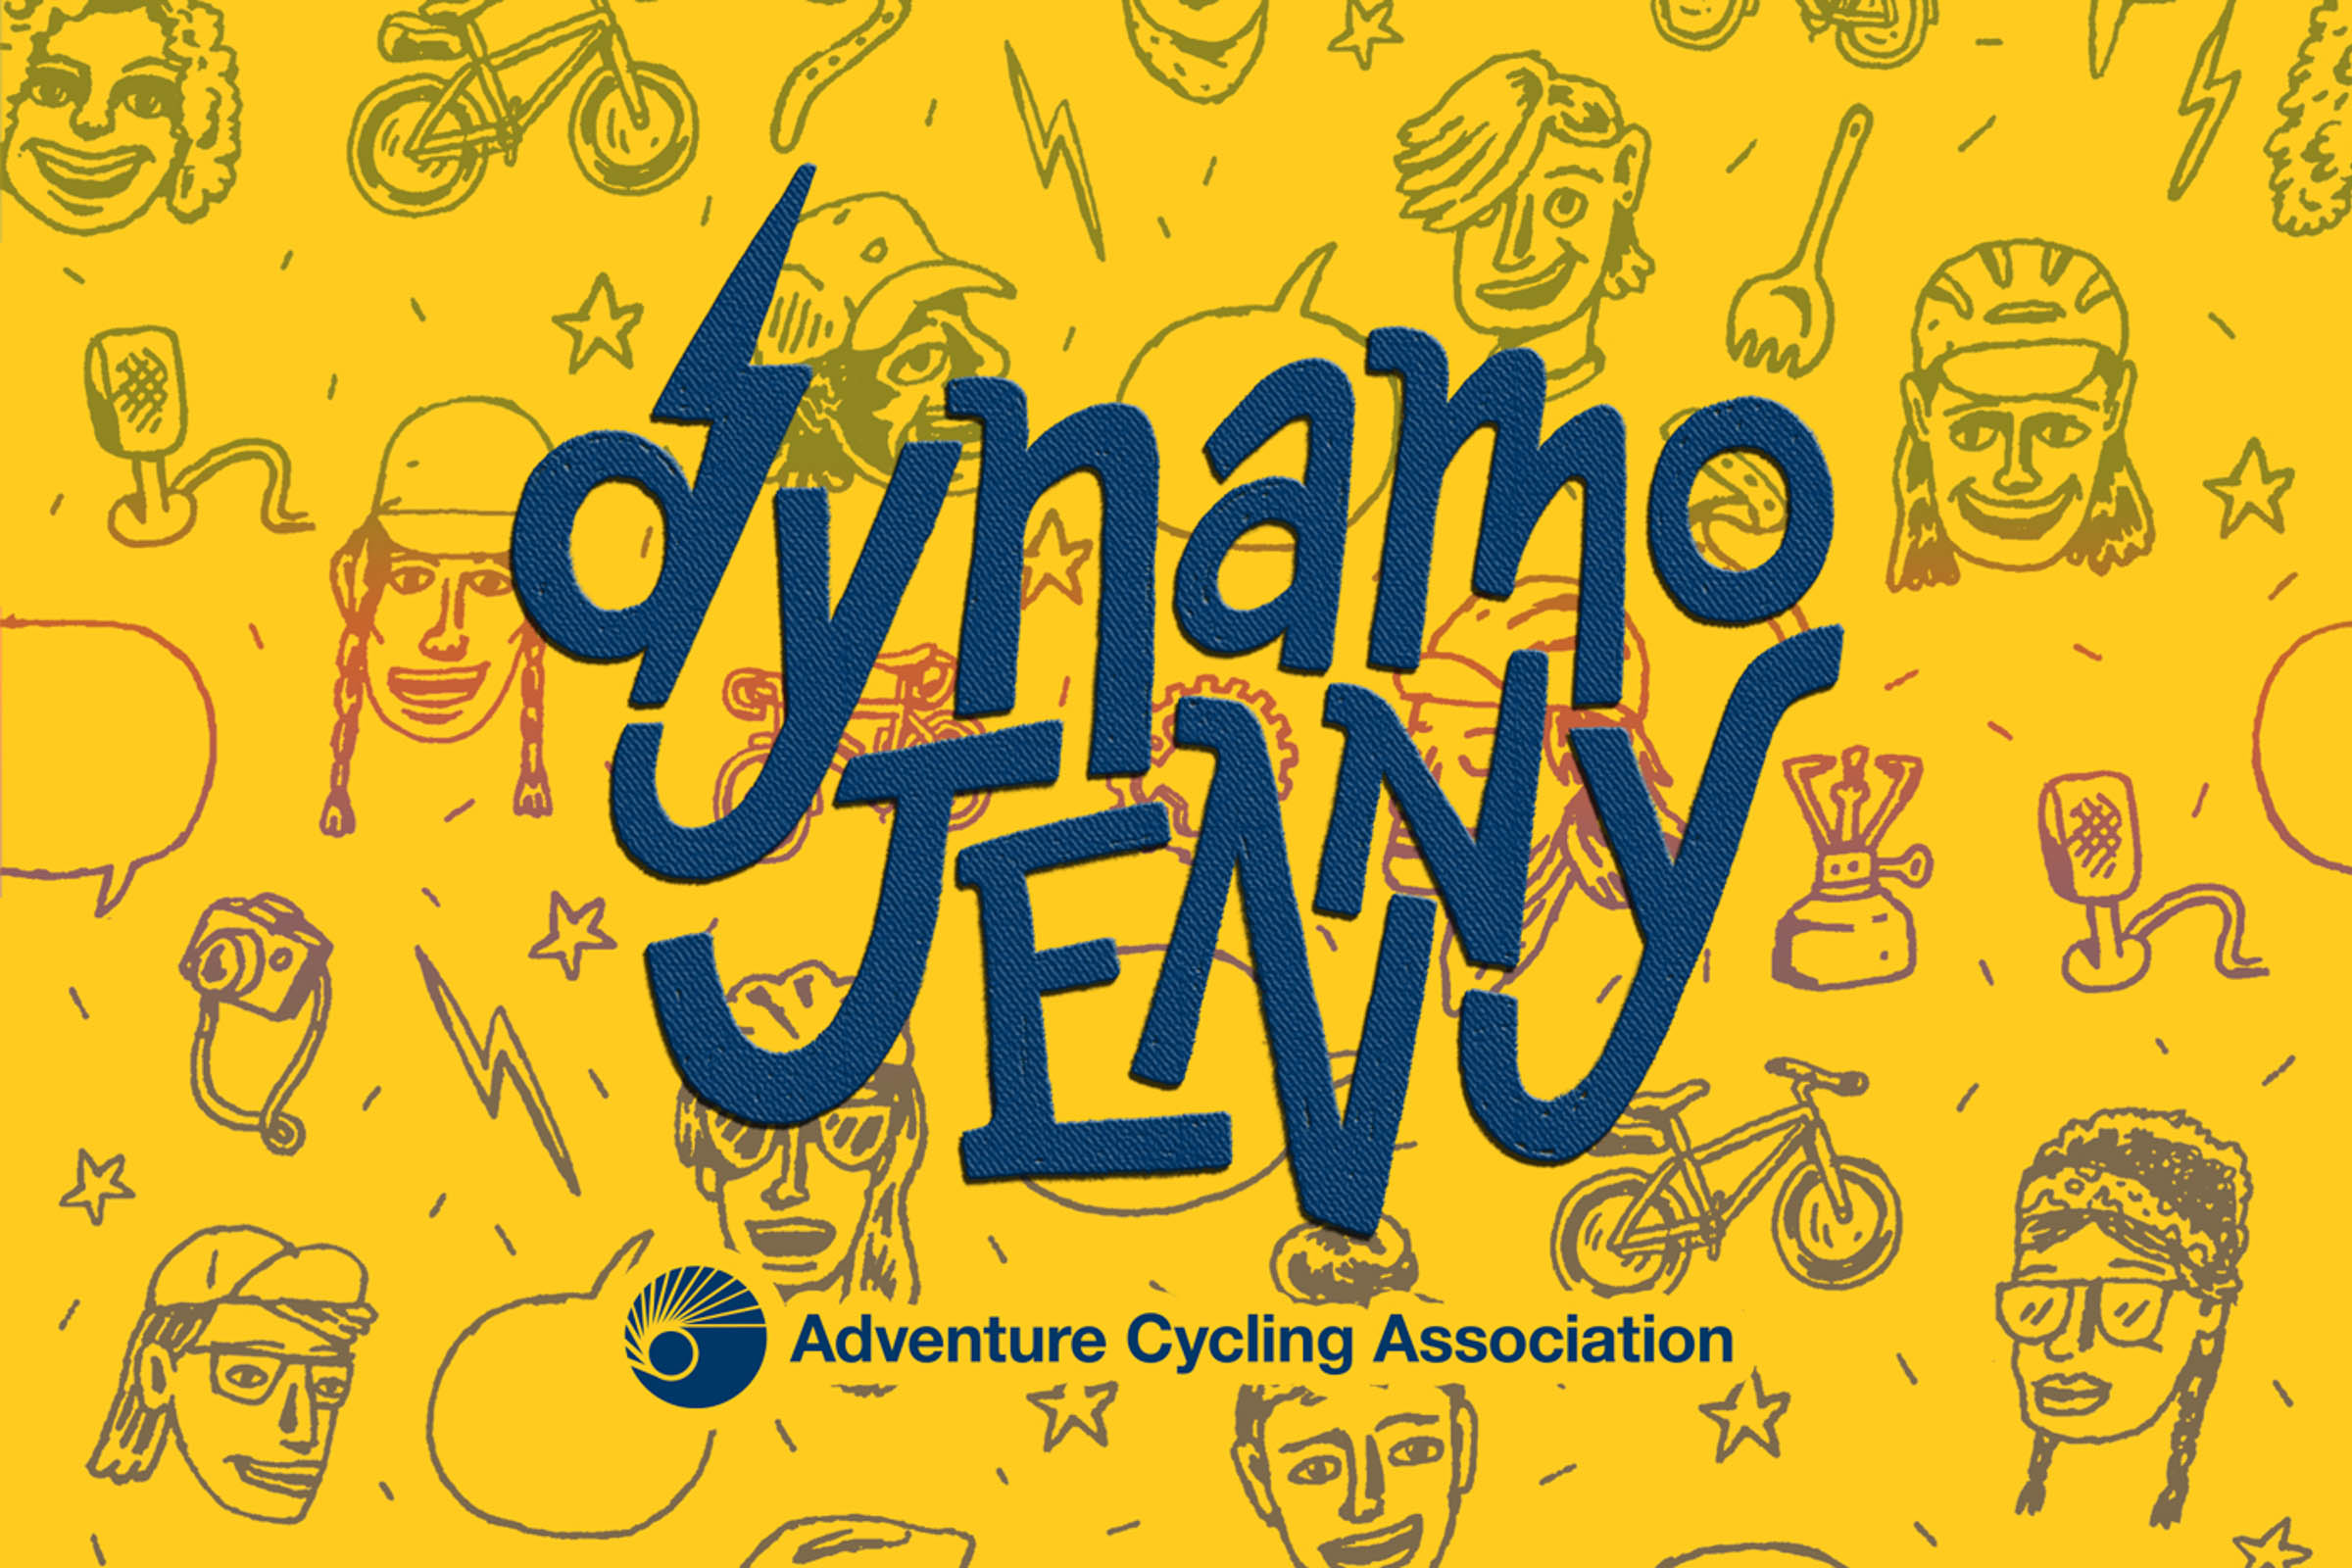 Dynamo Jenny